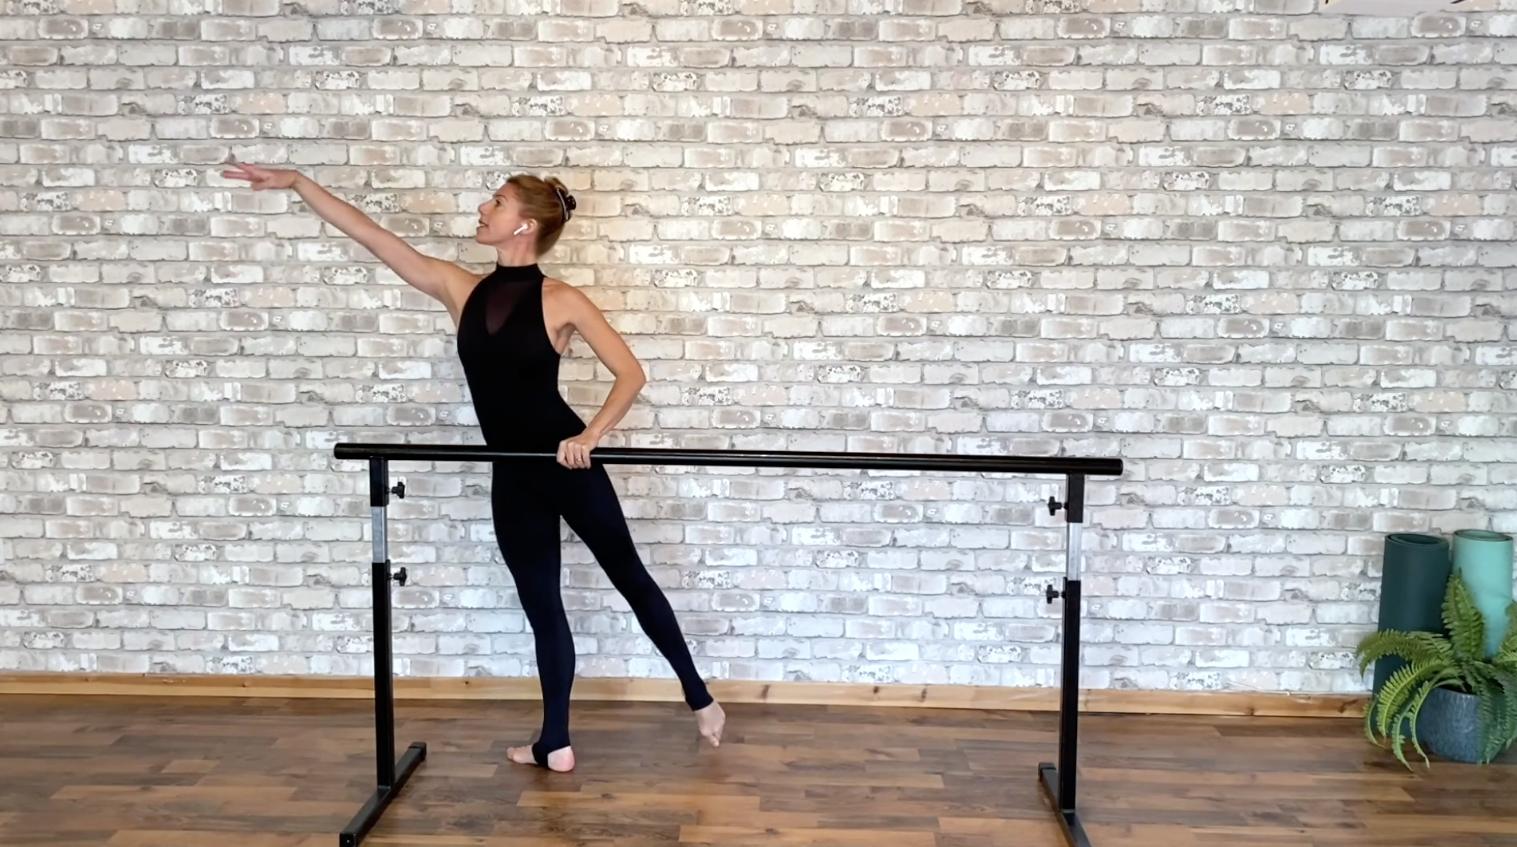 Ballet Technique - Intro/Energise